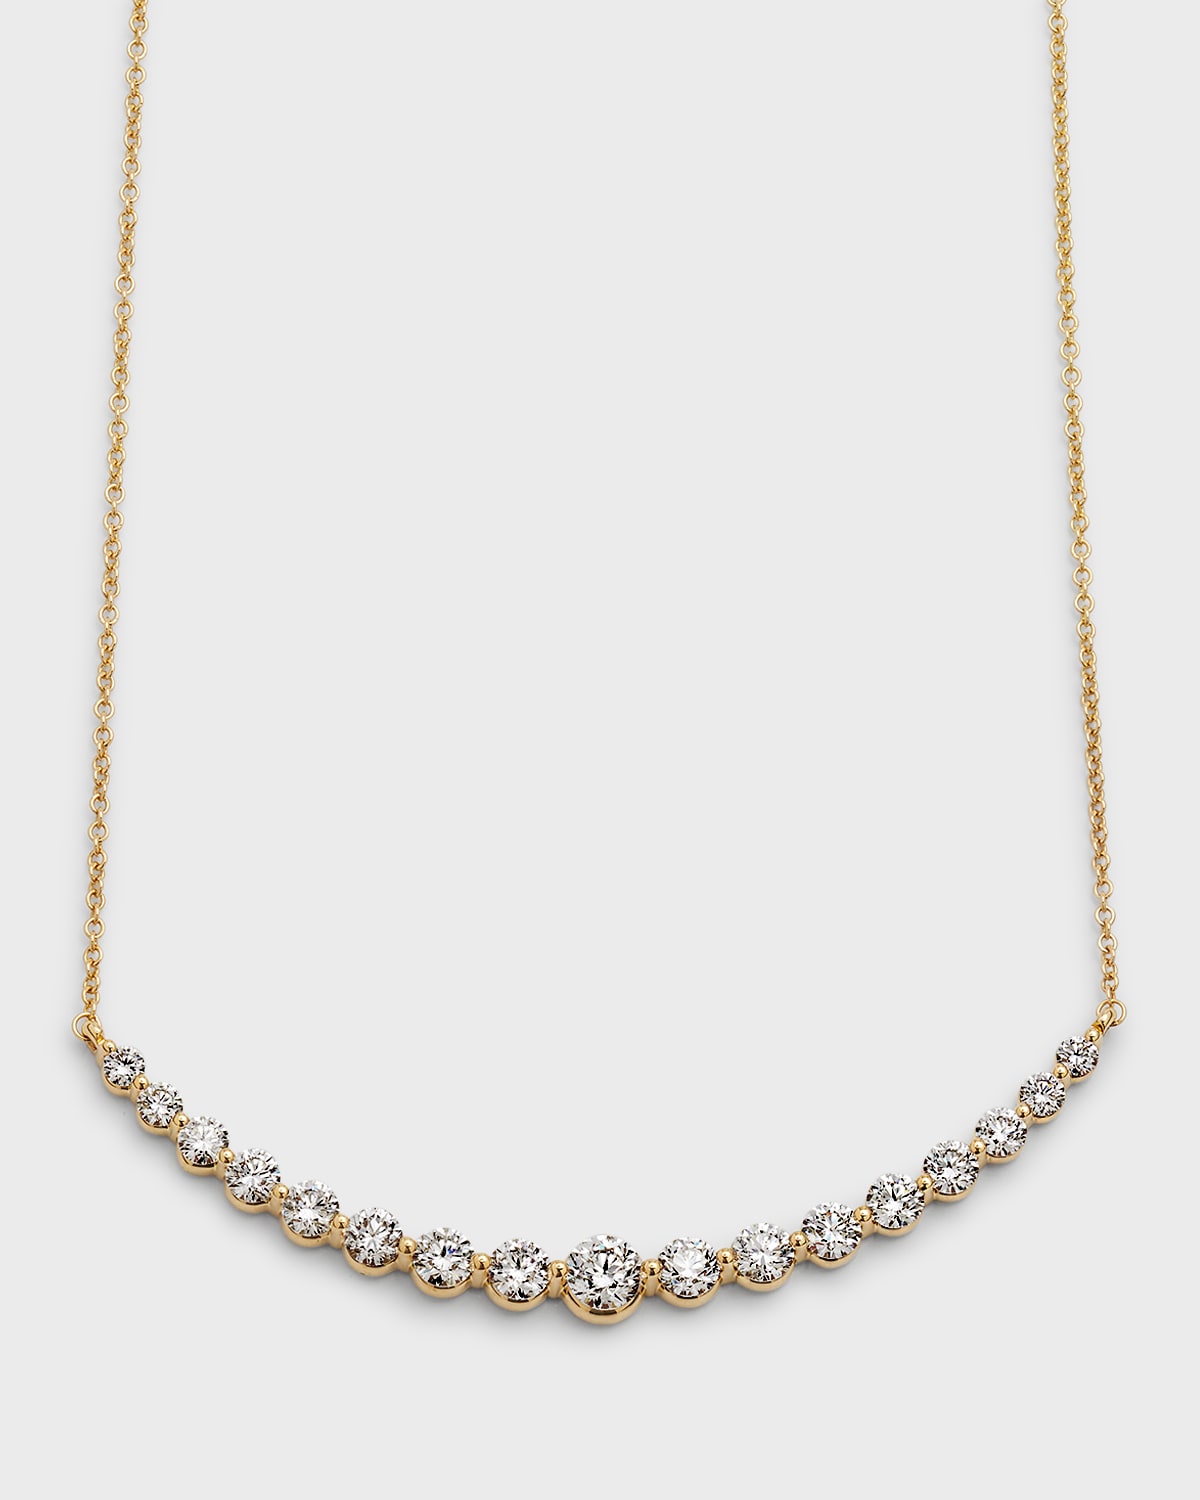 NM Diamond Collection 18k Yellow Gold 17 Round Diamond Smiley Necklace